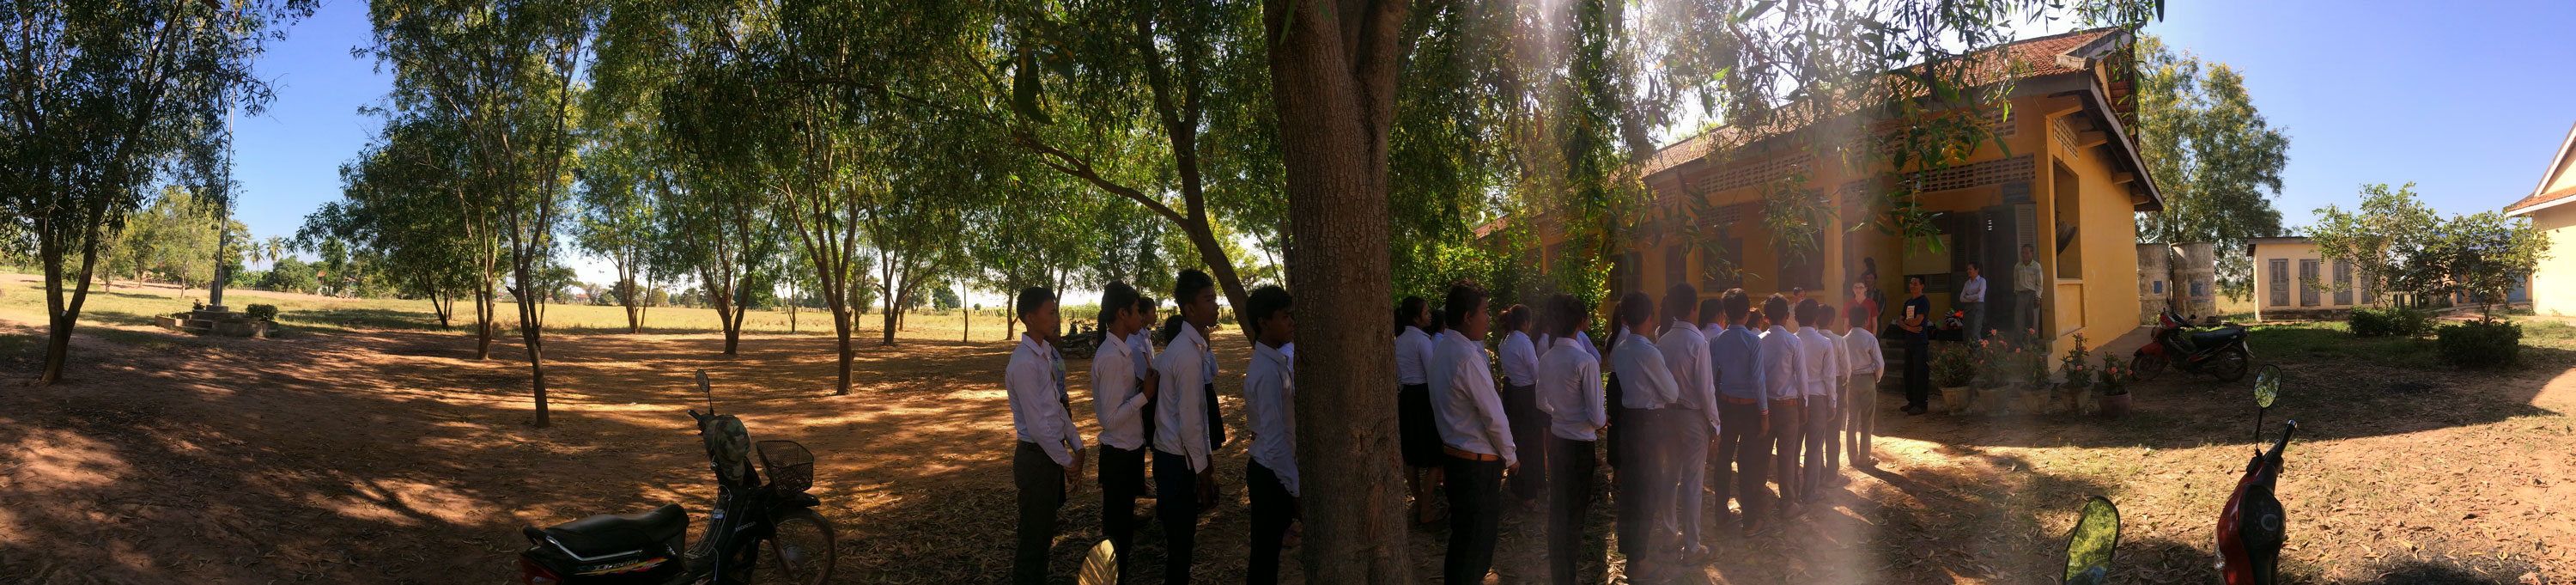 Visiting a school in Cambodia